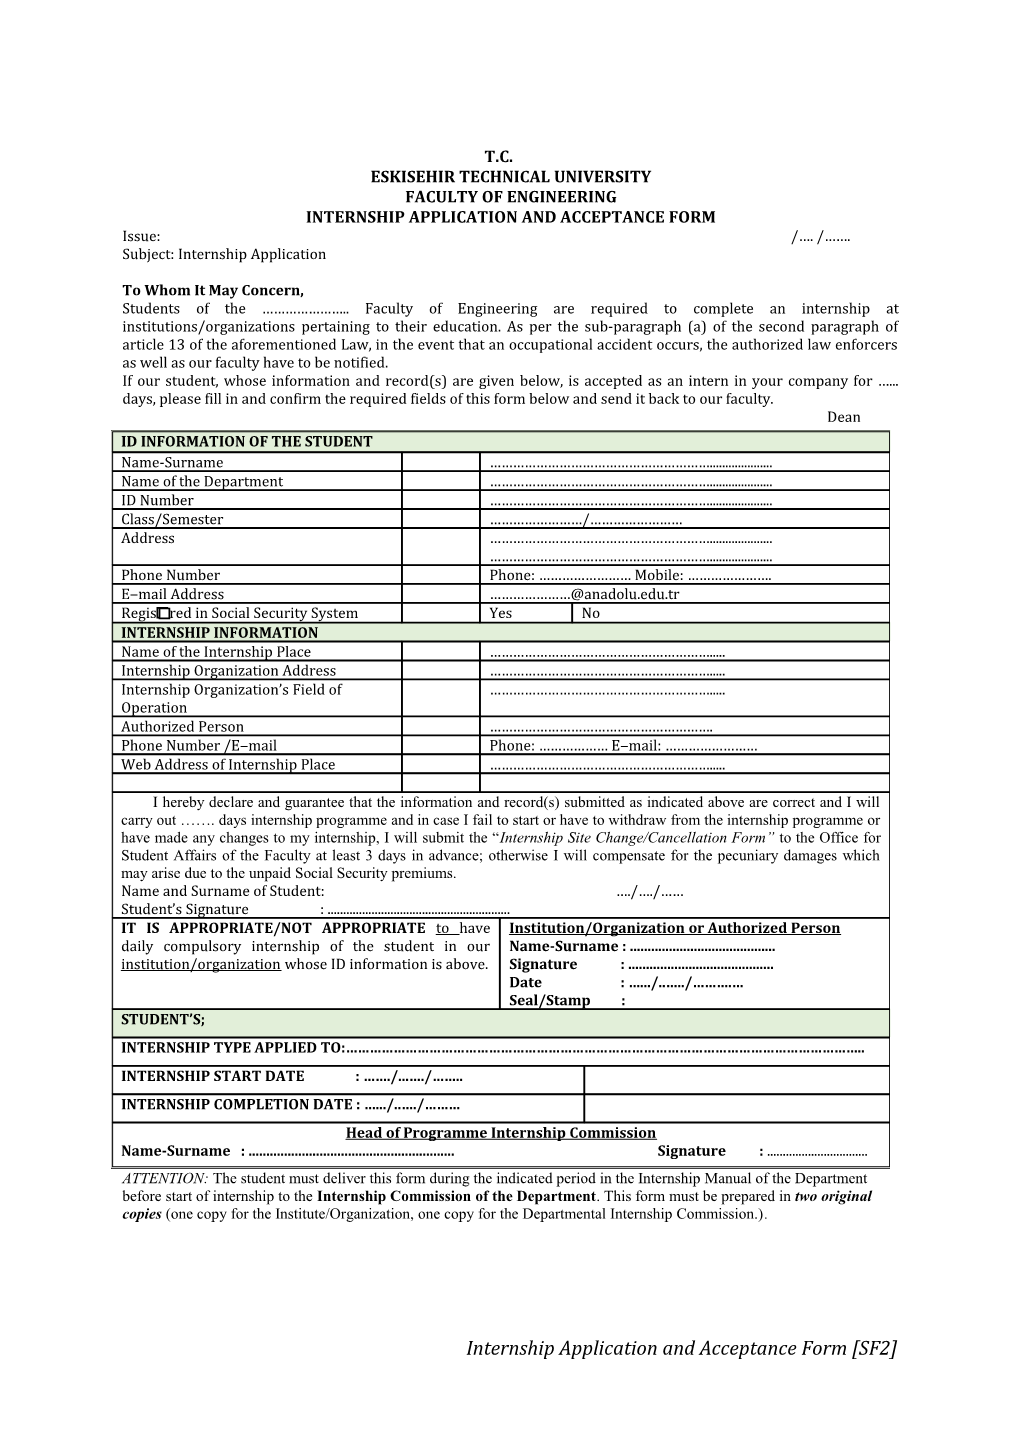 Internship Application and Acceptance Form